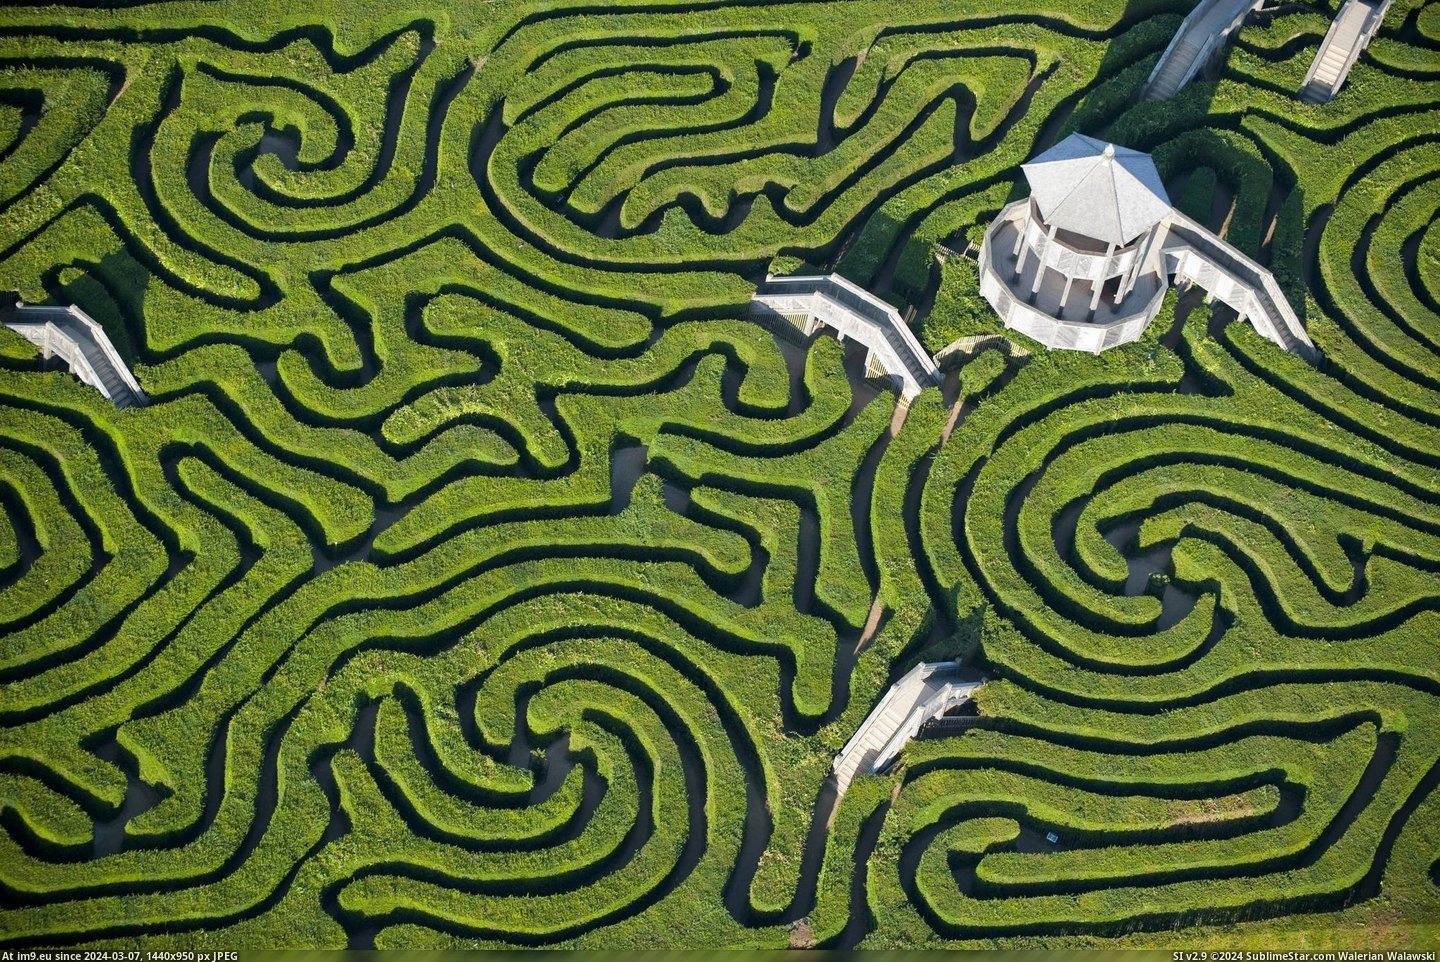 #England #Longleat #Maze [Pics] Maze at Longleat, England Pic. (Obraz z album My r/PICS favs))